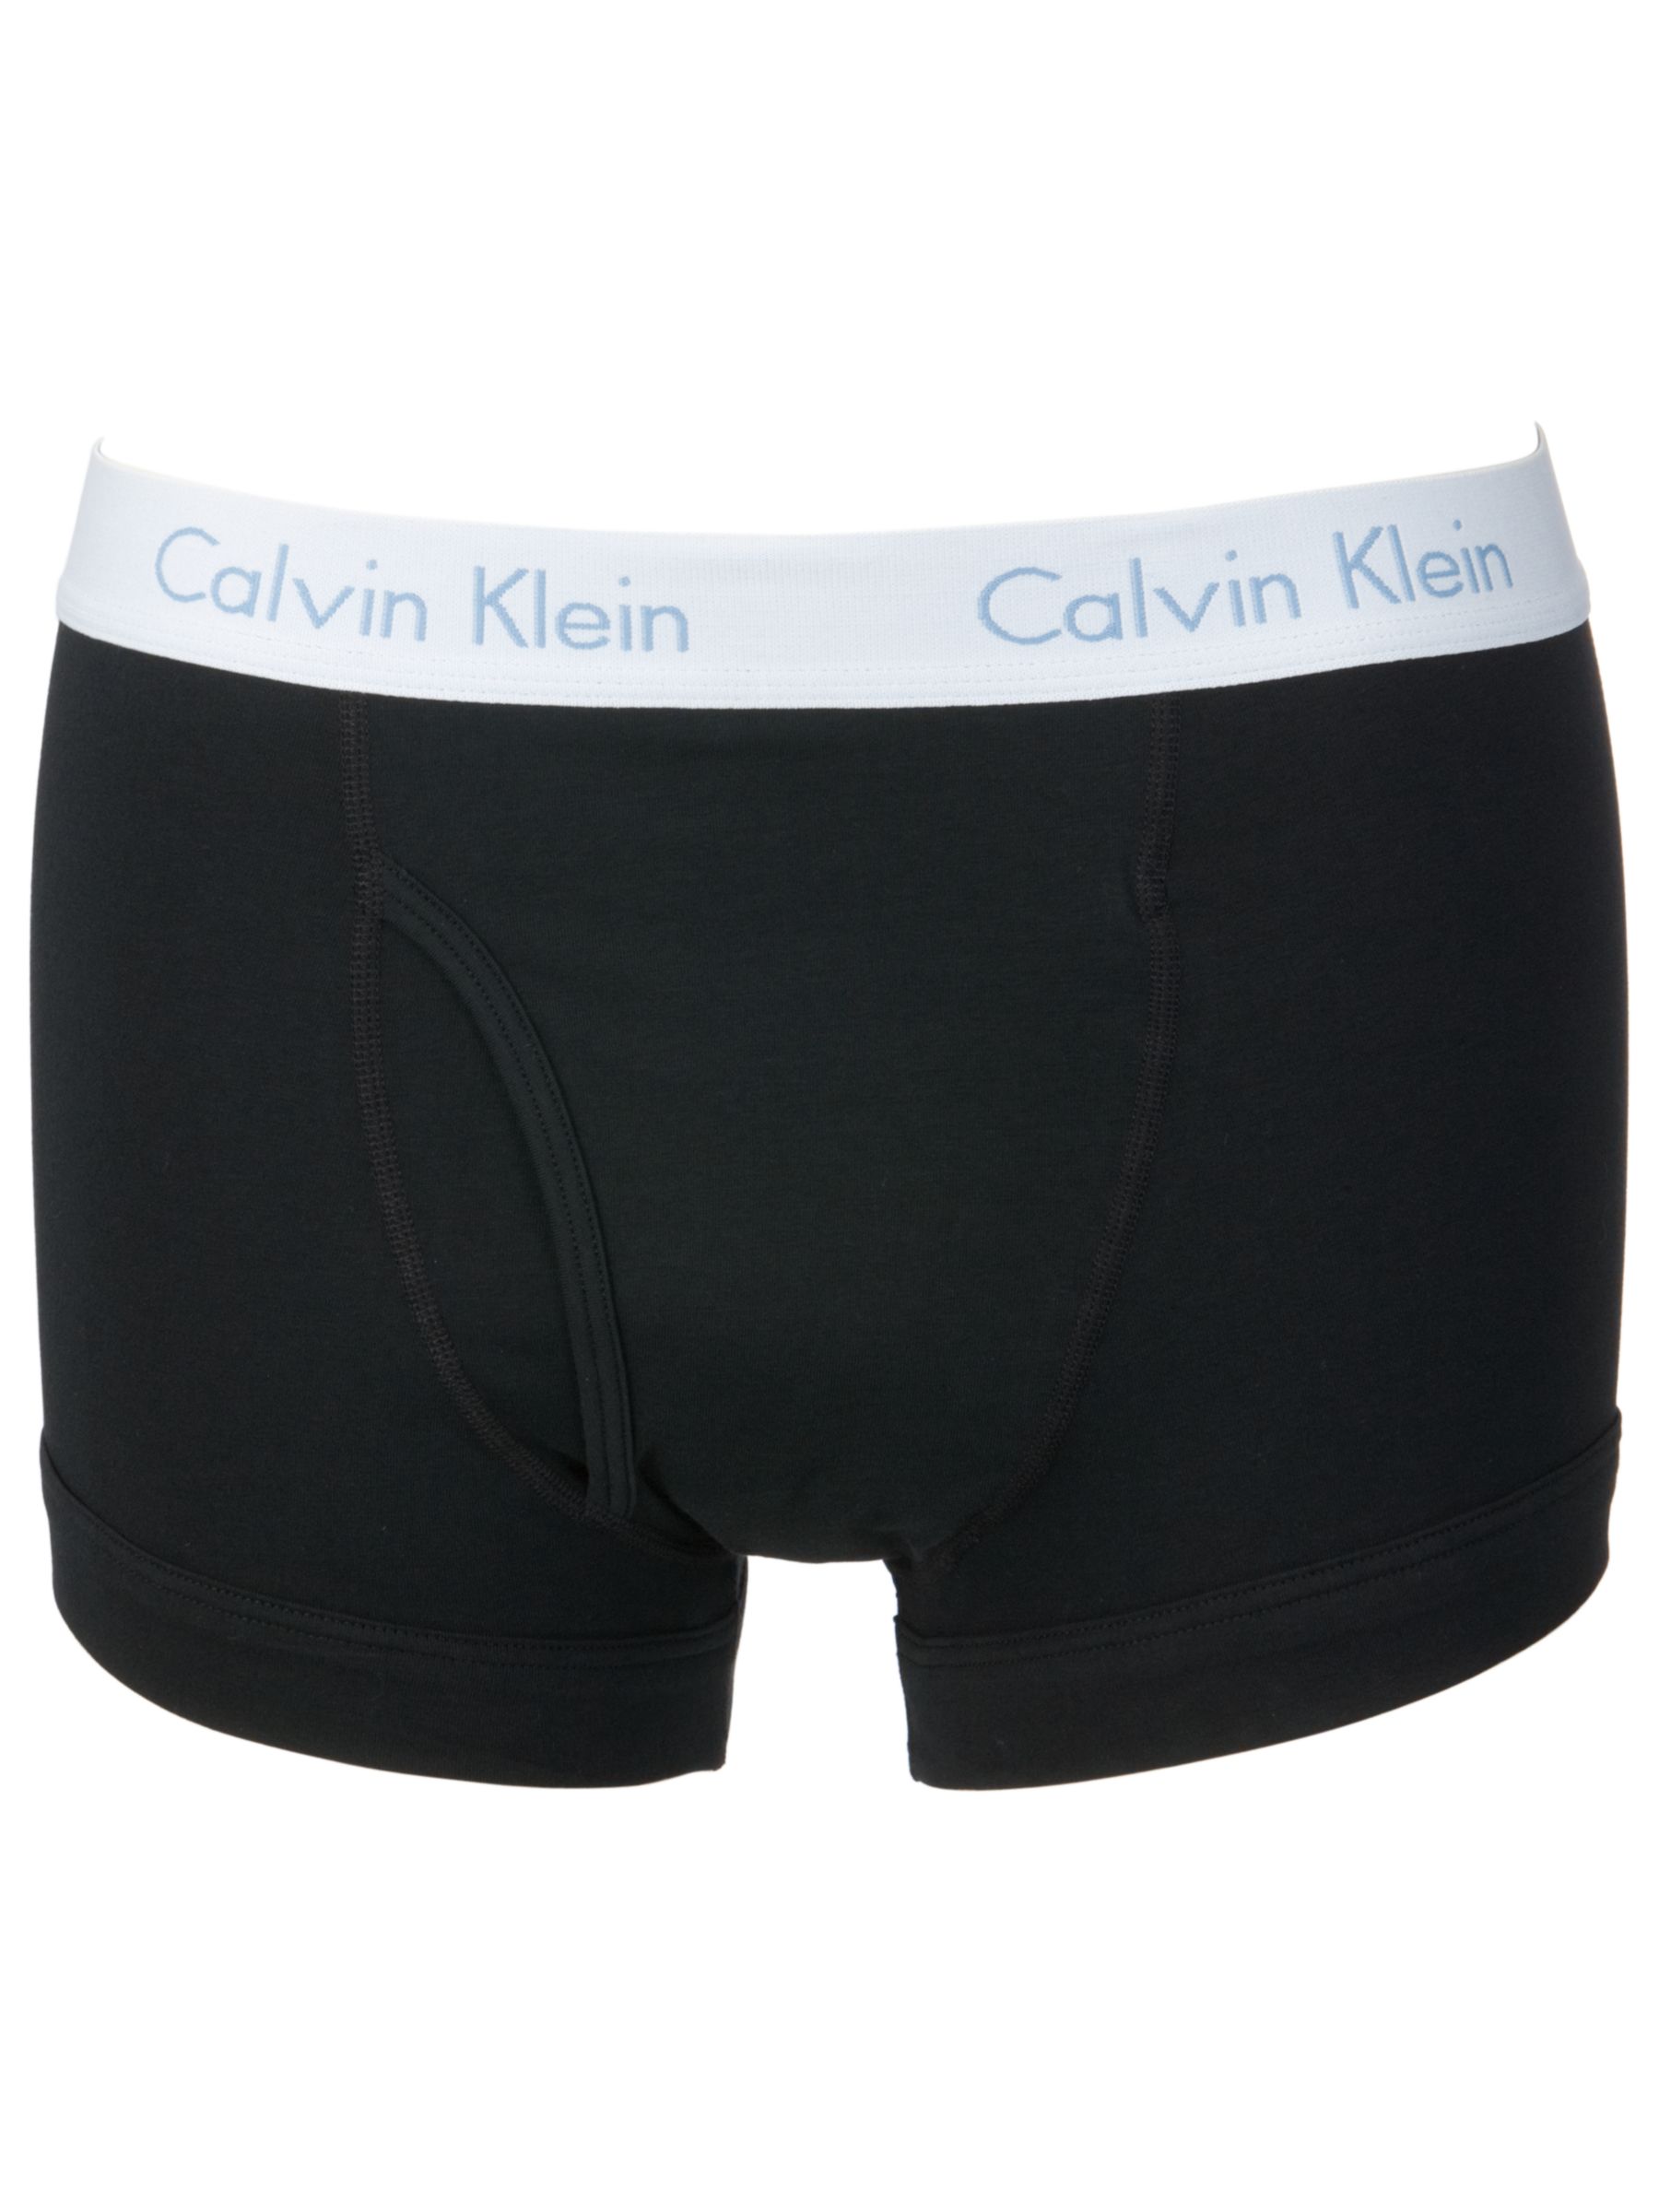 Calvin Klein Flexible Fit Trunks, Black, Medium